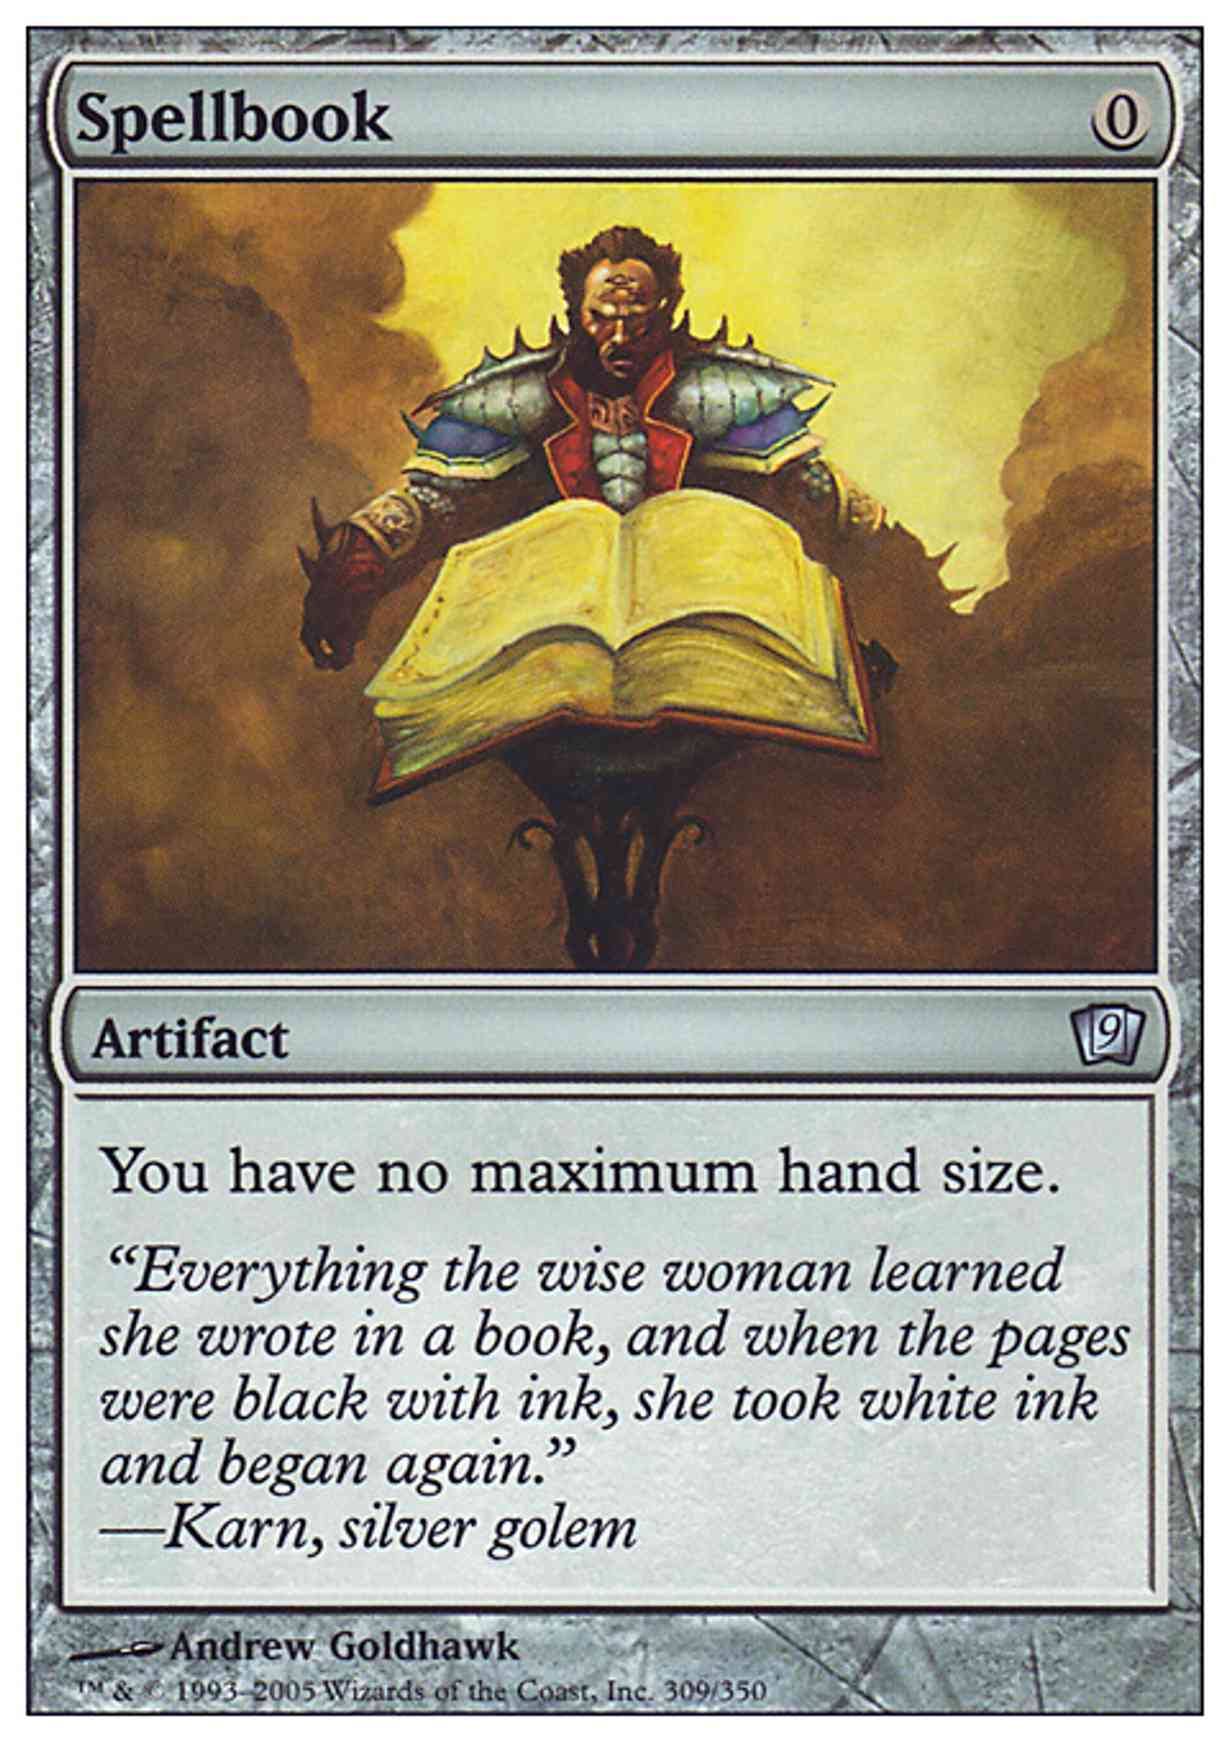 Spellbook magic card front